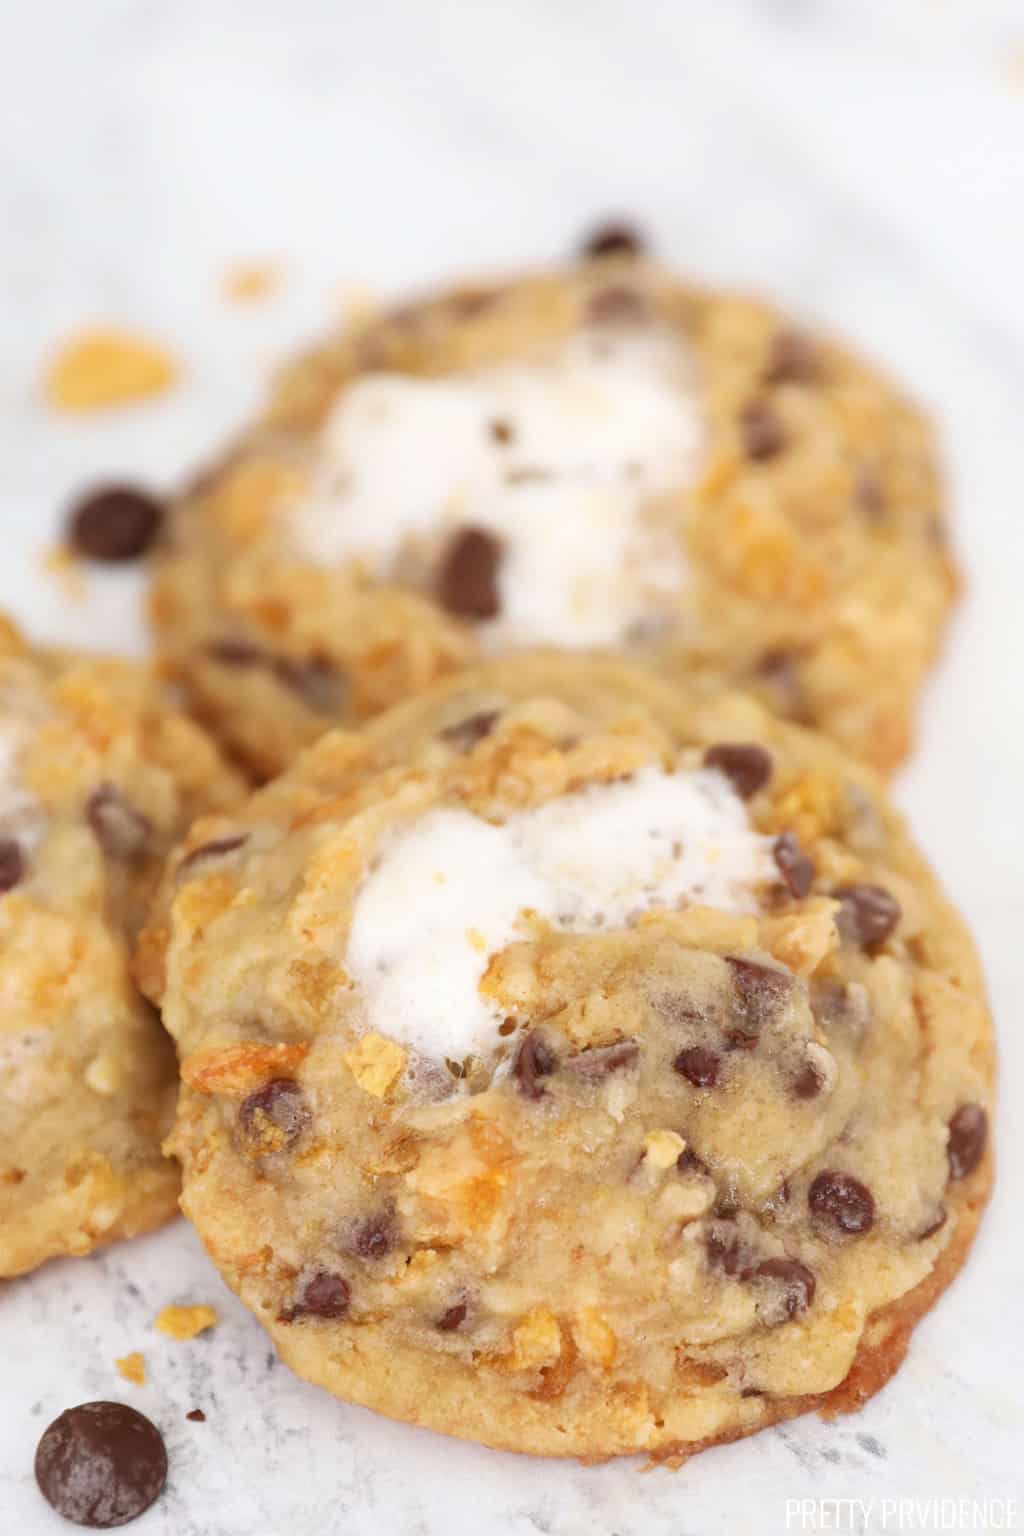 Cornflake Chocolate Chip Marshmallow Cookies (Copycat Milk Bar Recipe)